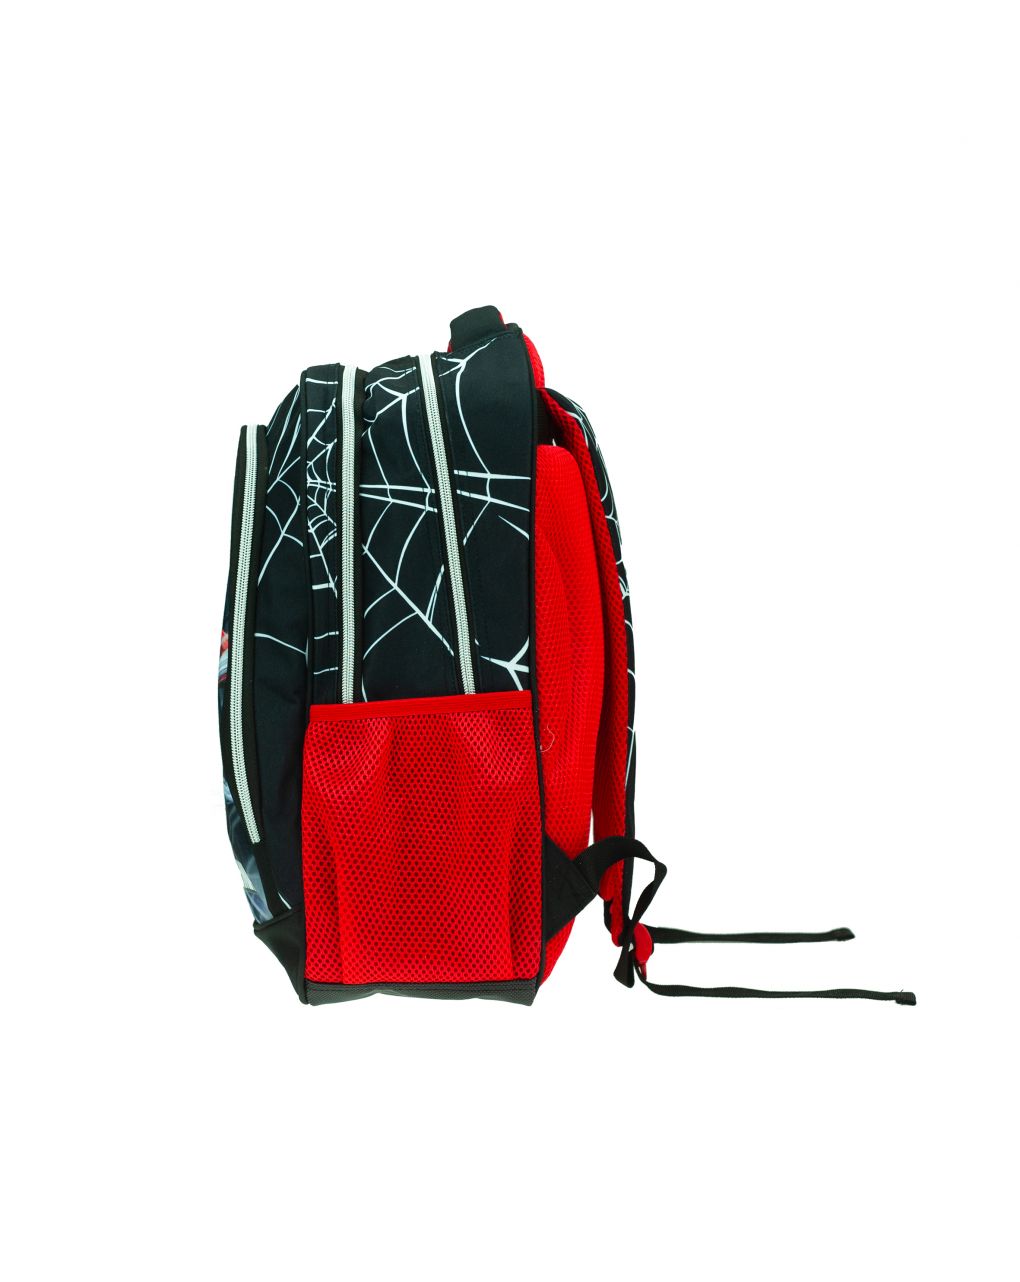 Gim τσάντα δημοτικού πλάτης οβάλ spiderman black city 337-05031 - Gim